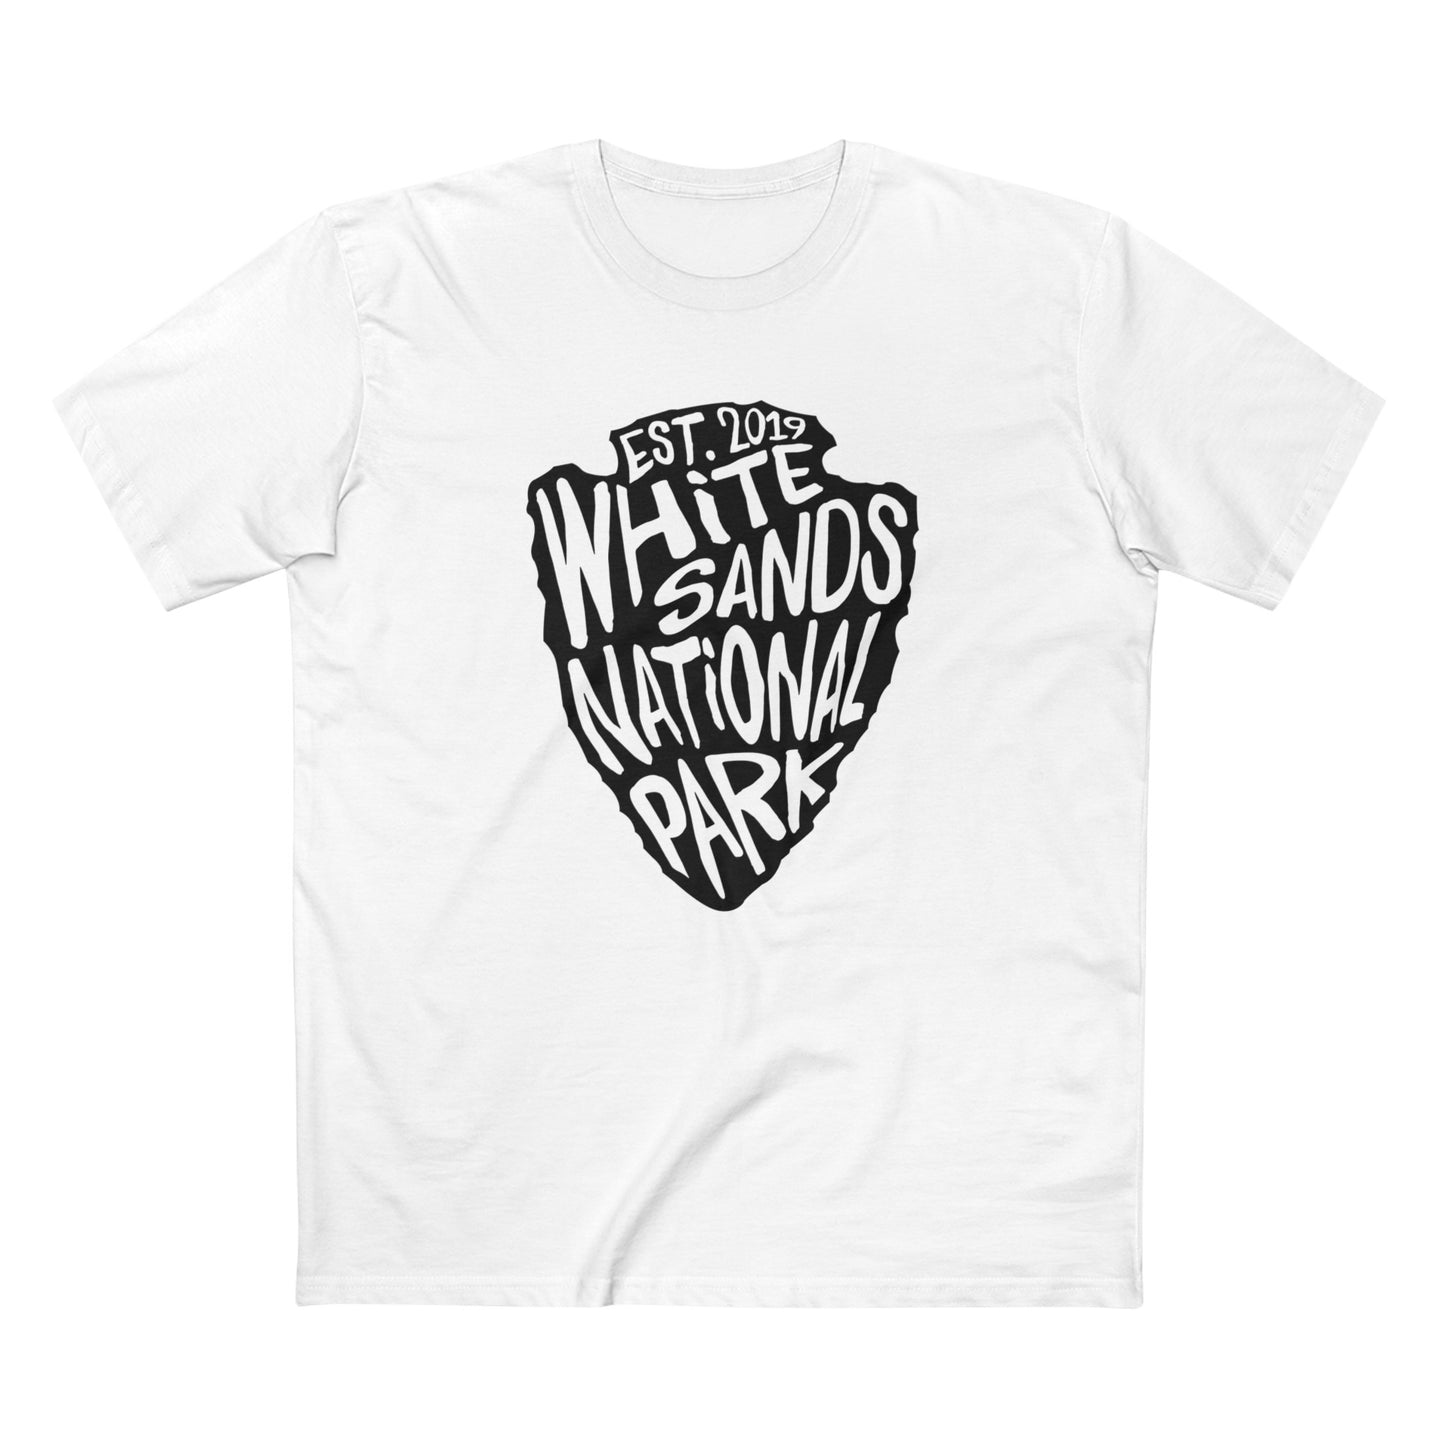 White Sands National Park T-Shirt - Arrowhead Design